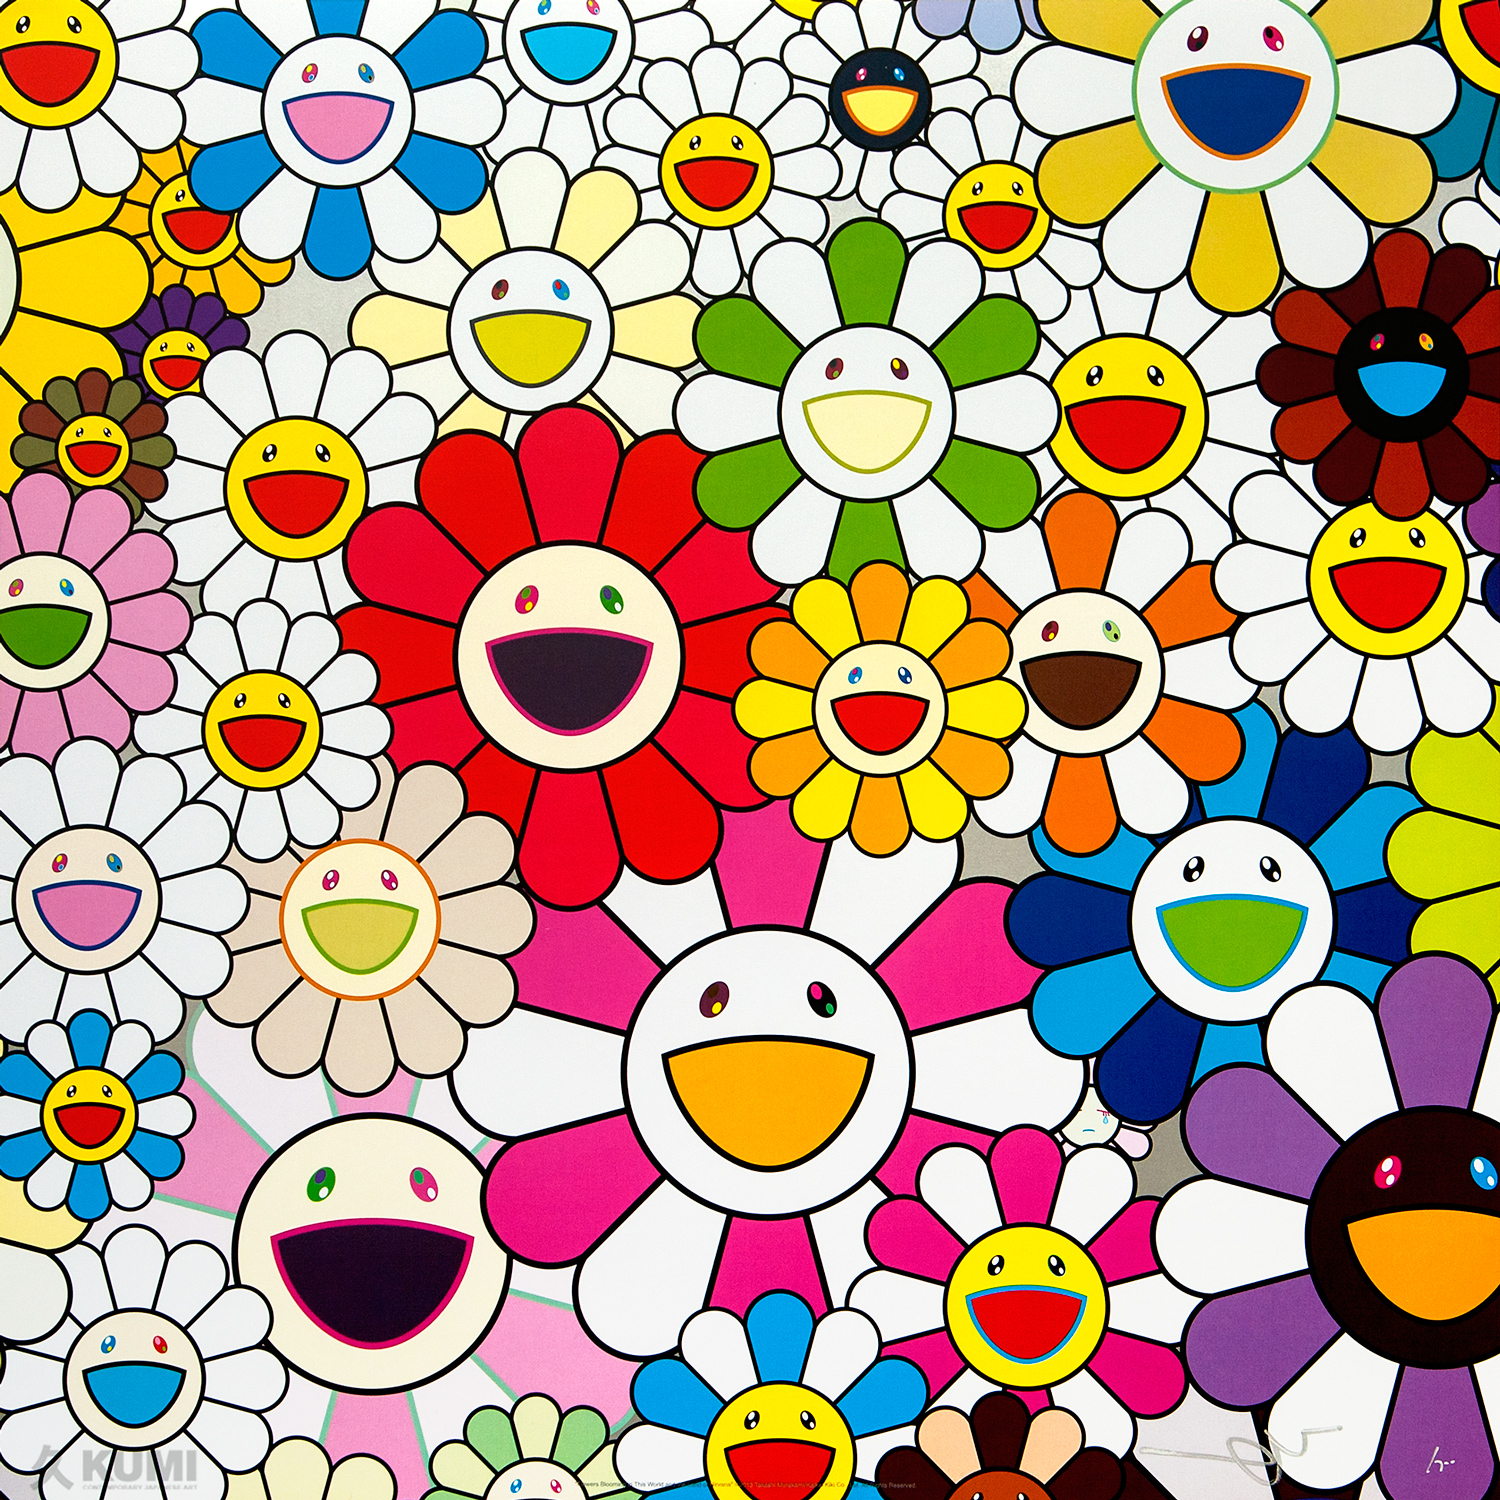 Takashi murakami wallpaper desktop 3 33861 HD Wallpapers Glefia.com